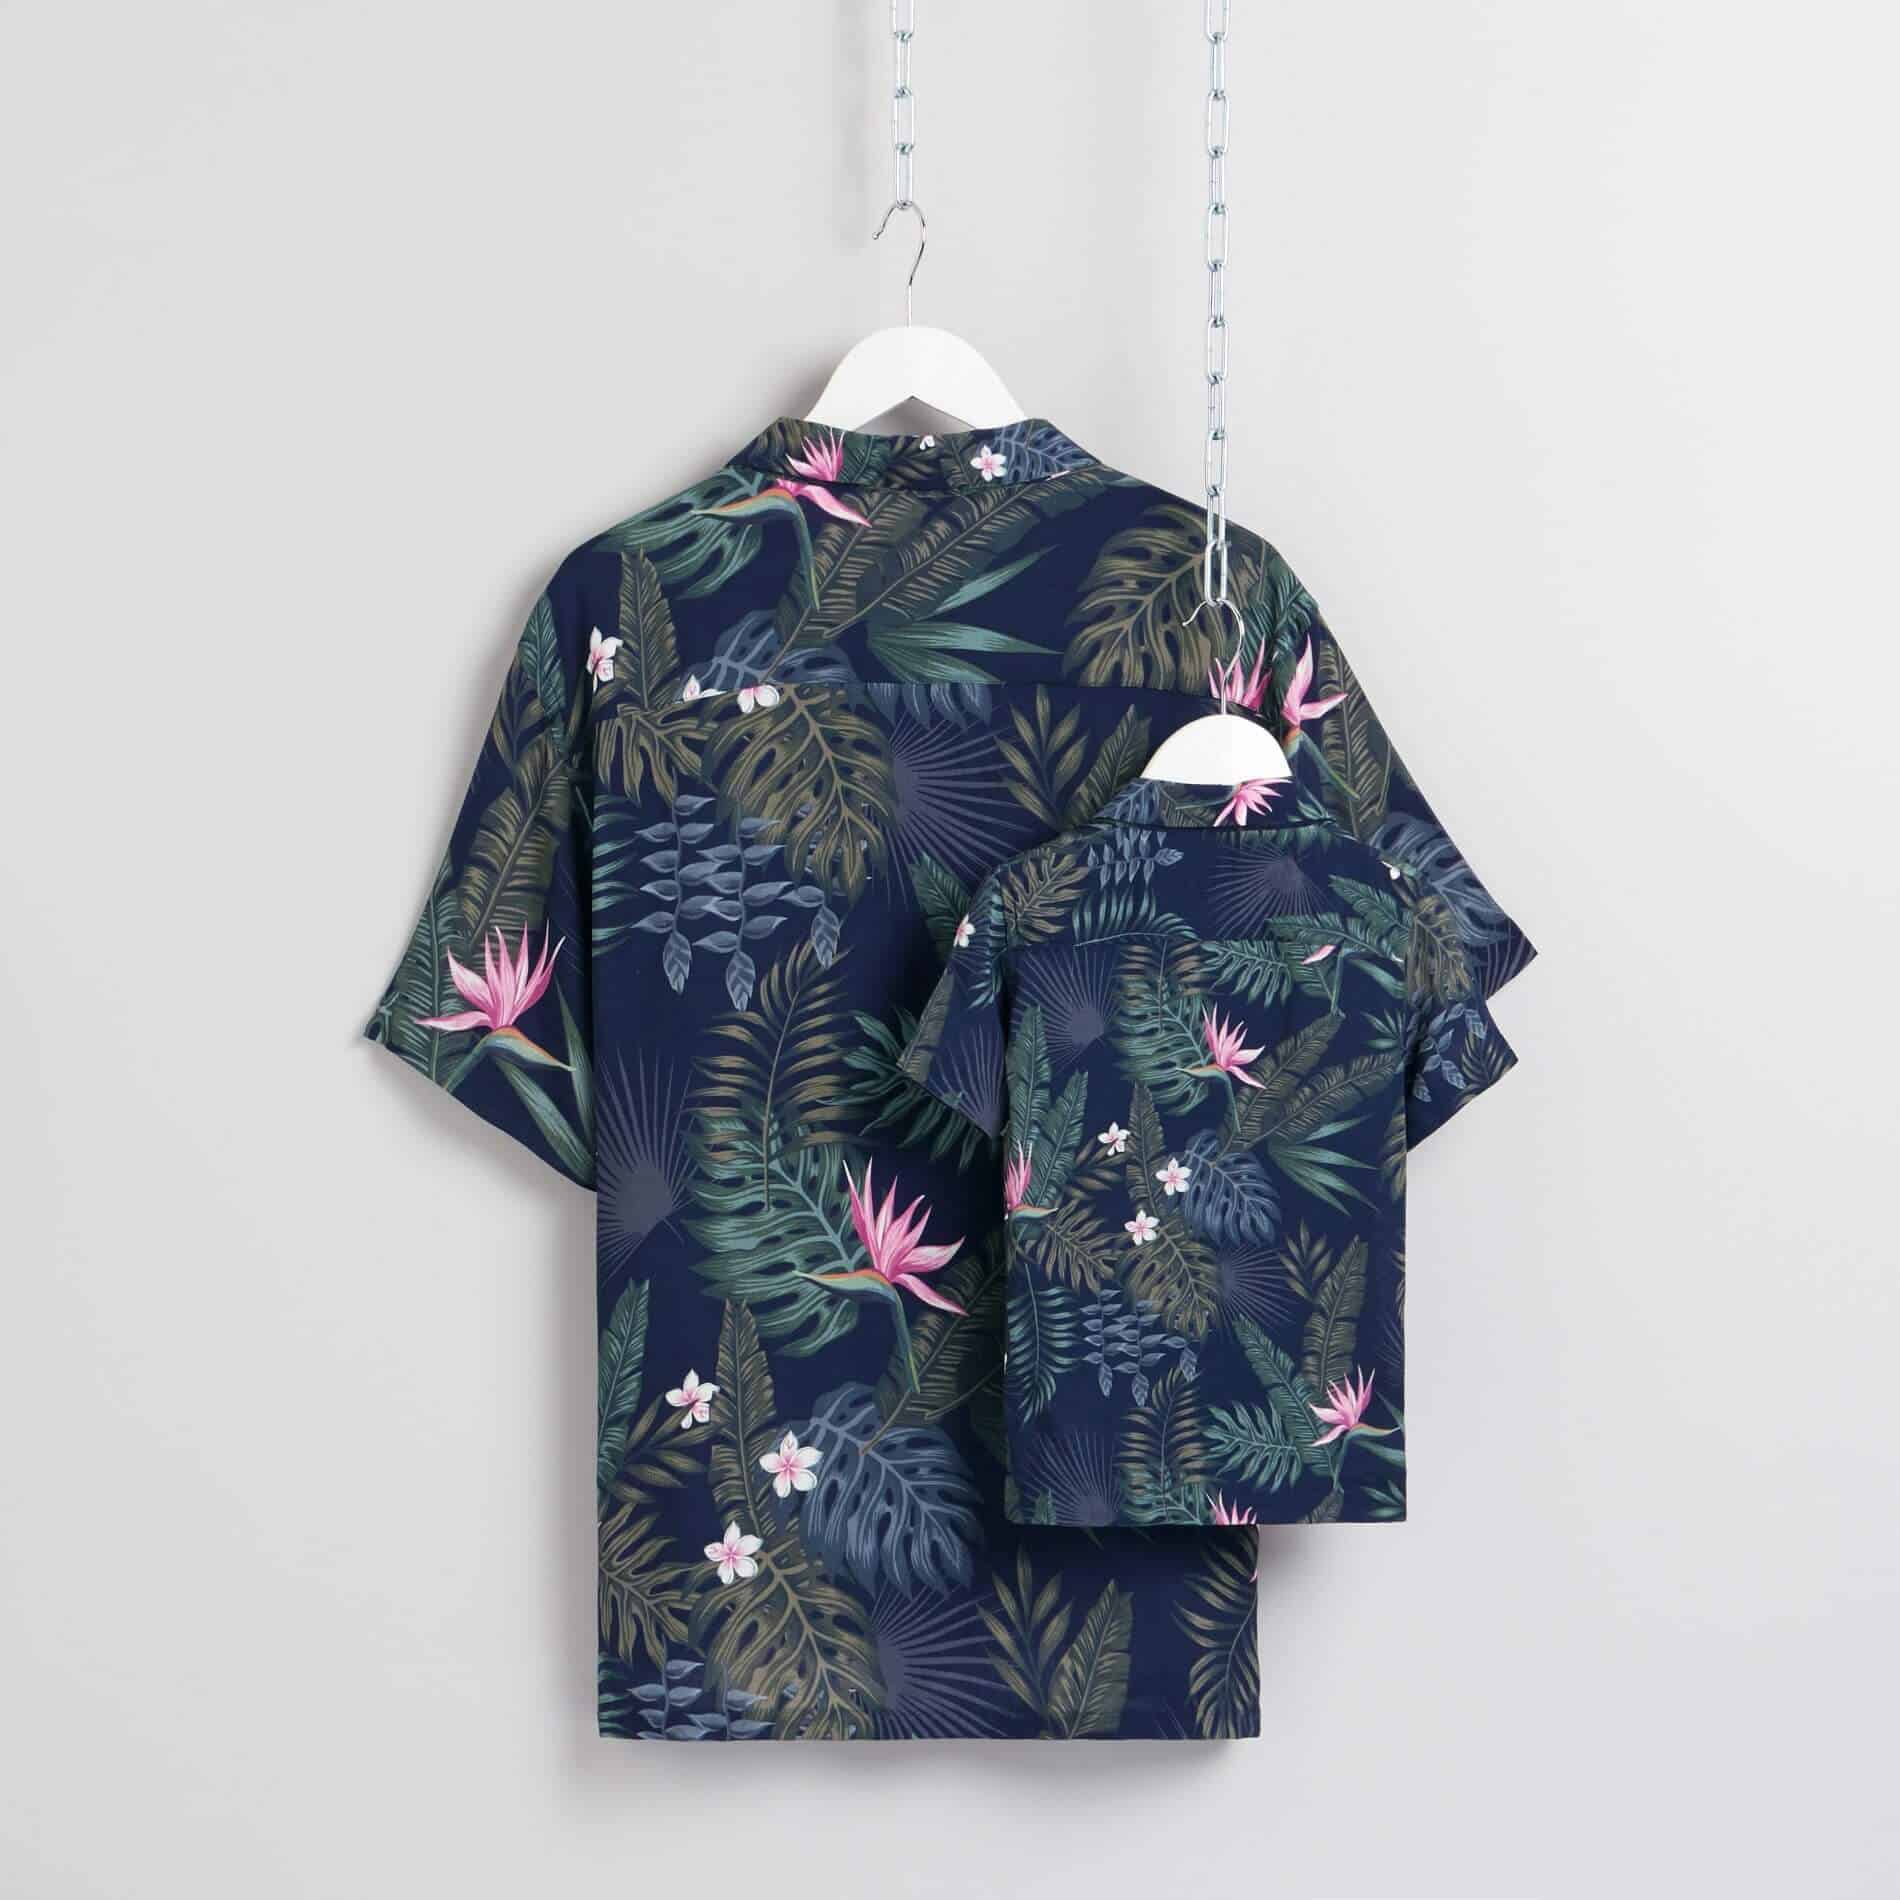 Tropical Resort Shirt, MANCUB